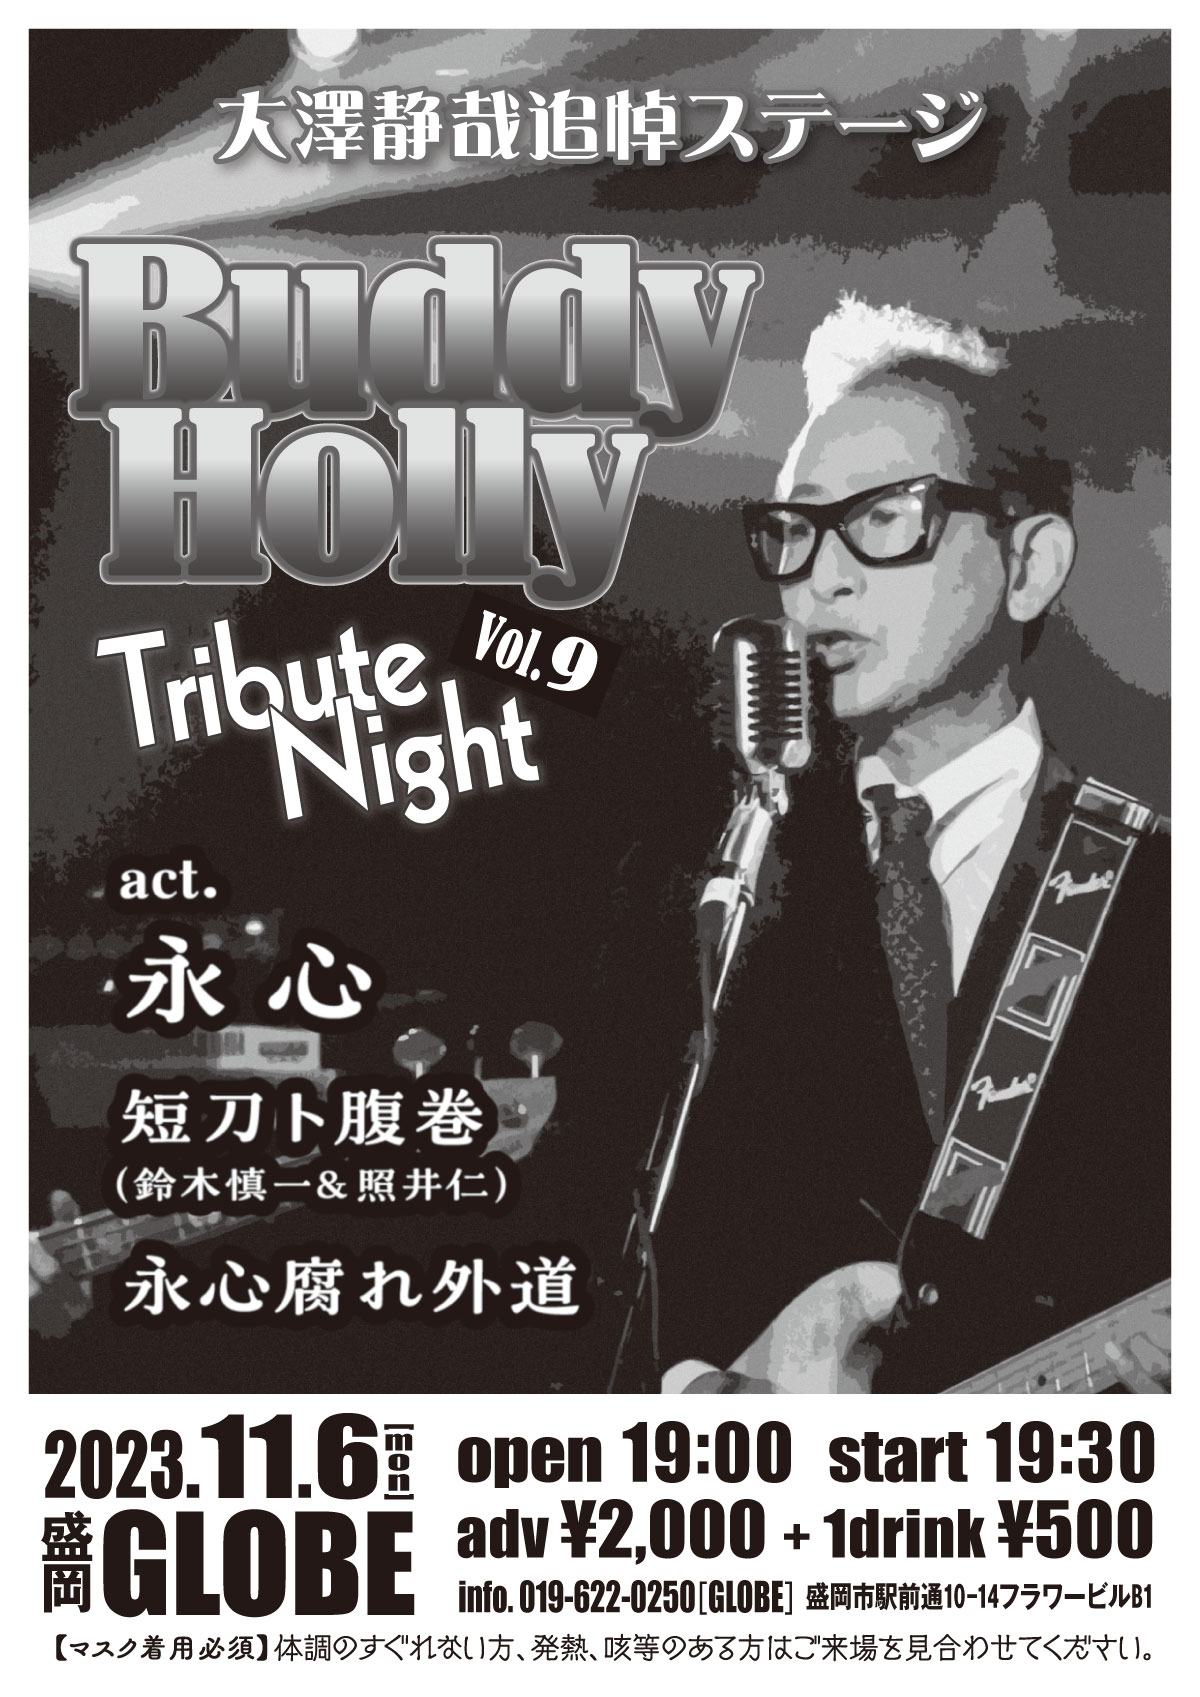 Buddy Holly Tribute Night Vol.9